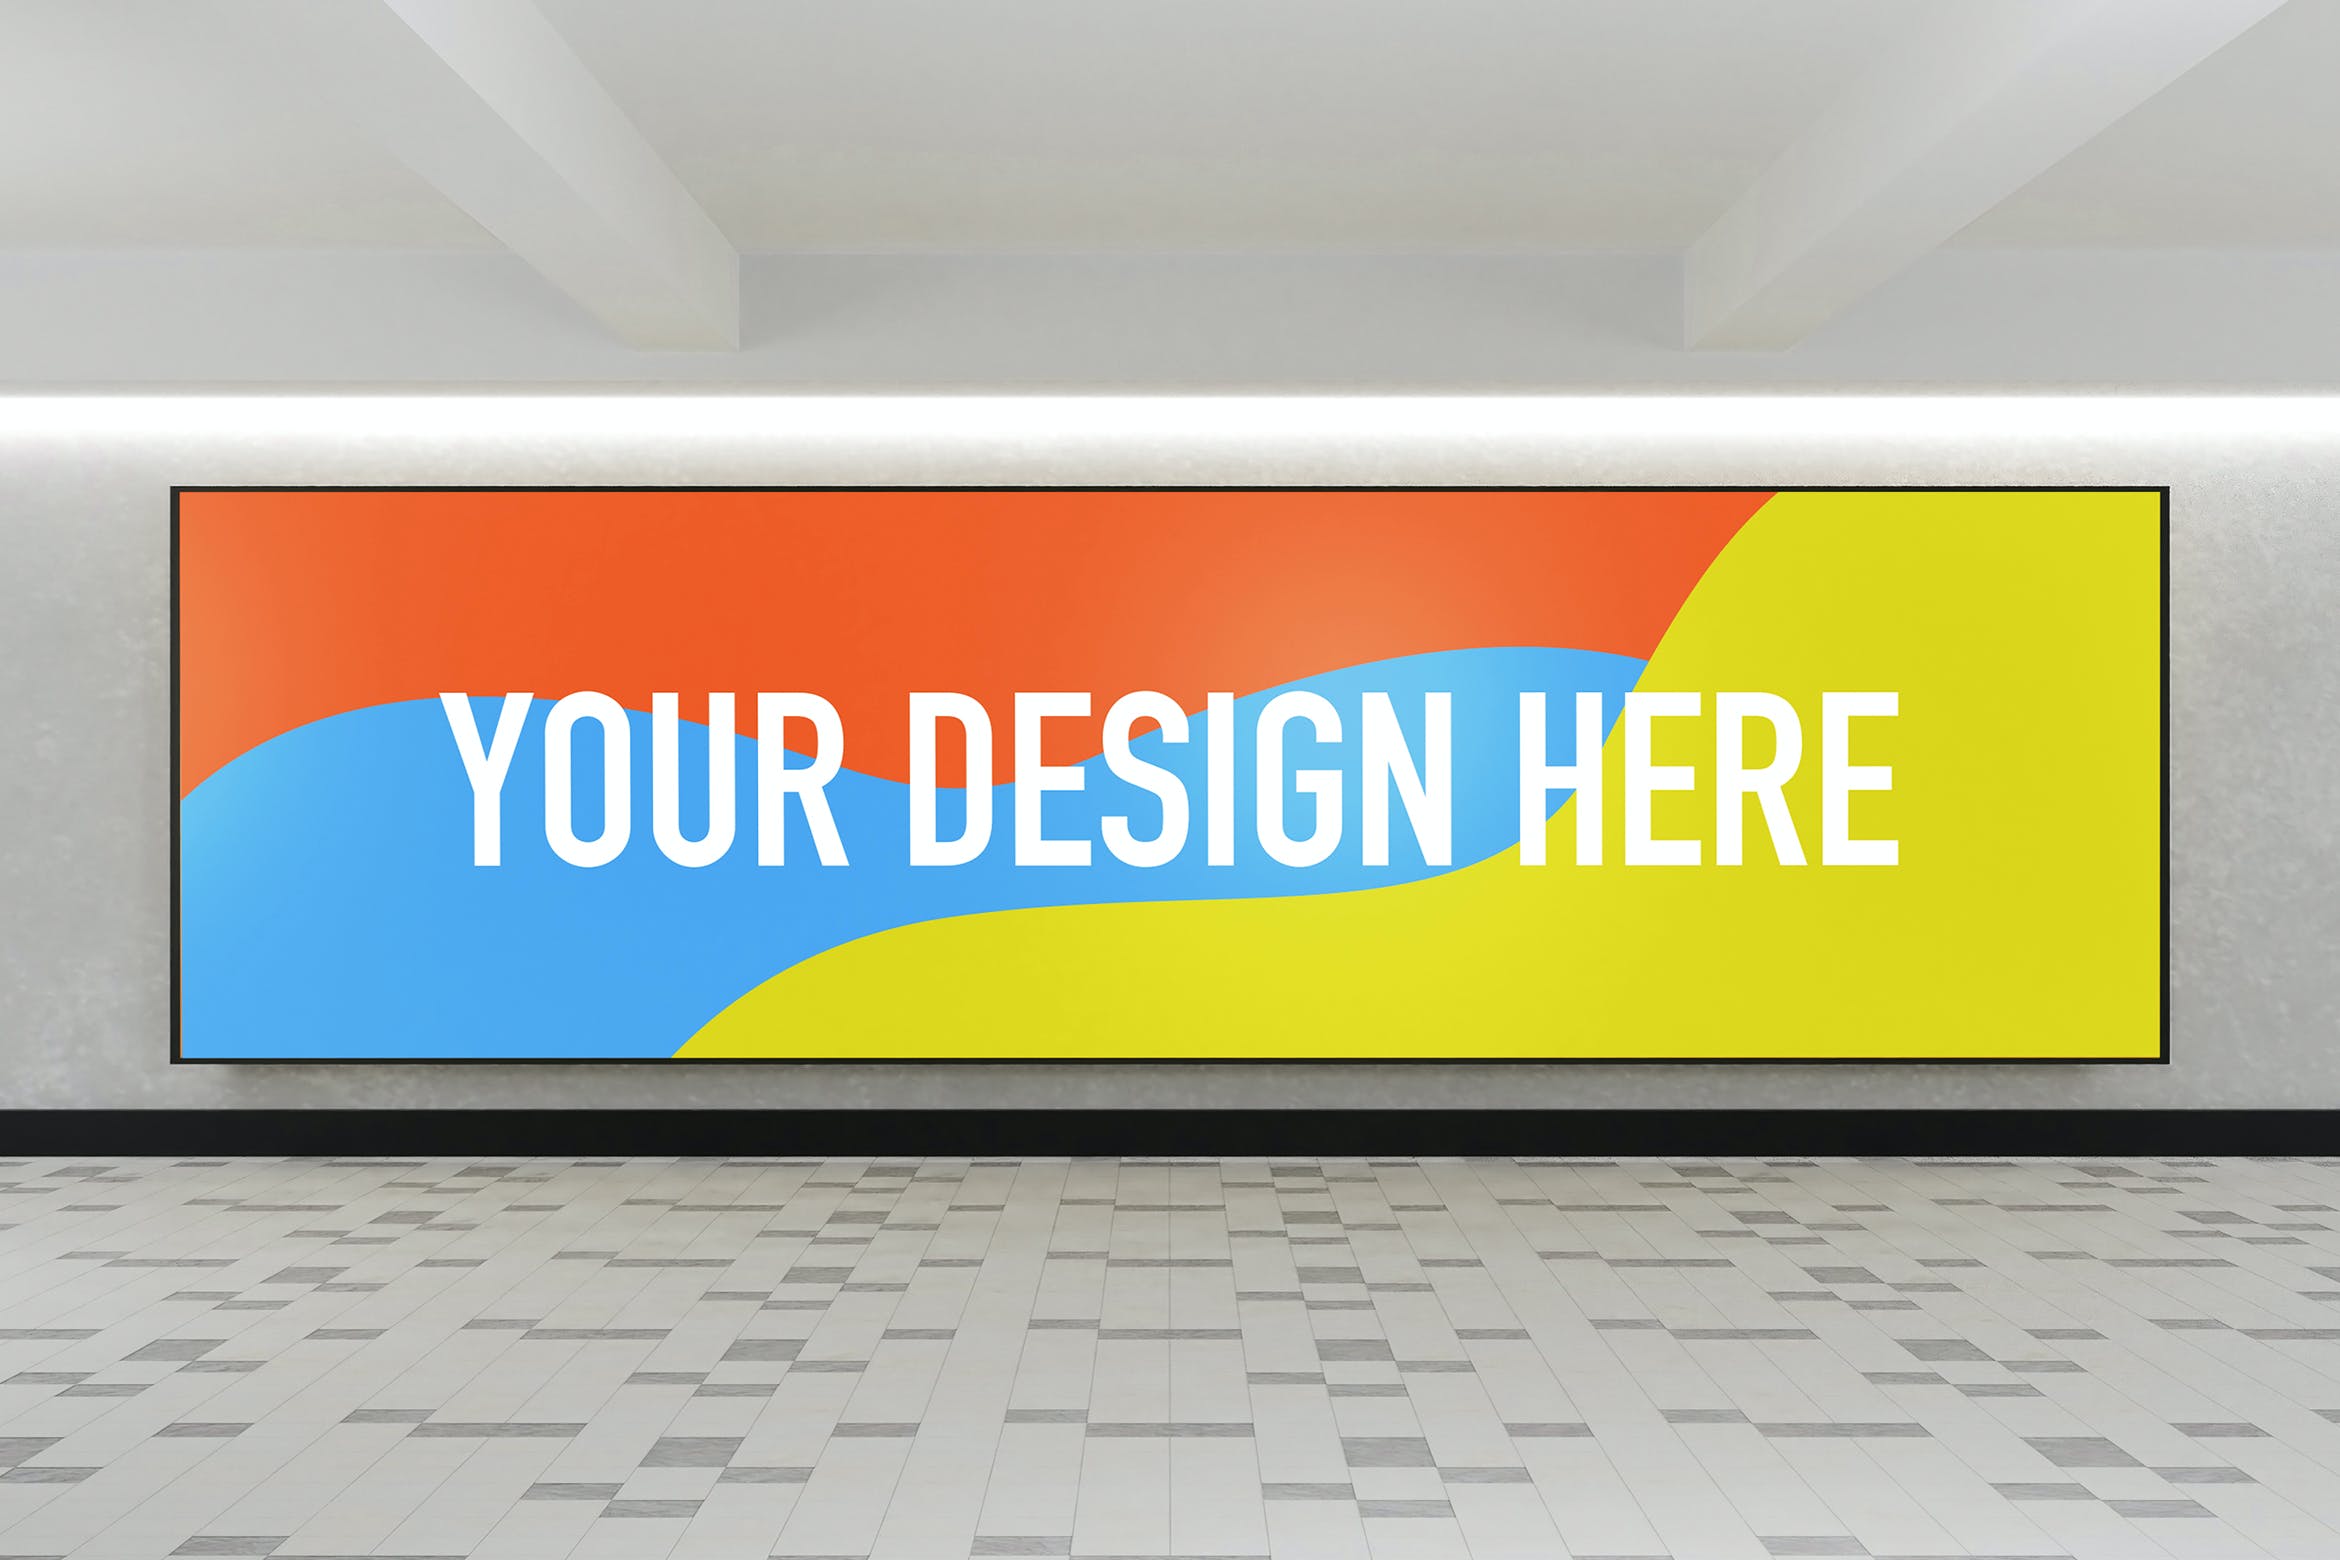 地铁广告牌设计样机模板 YDM Indoor Advertising Billboard Mockup设计素材模板